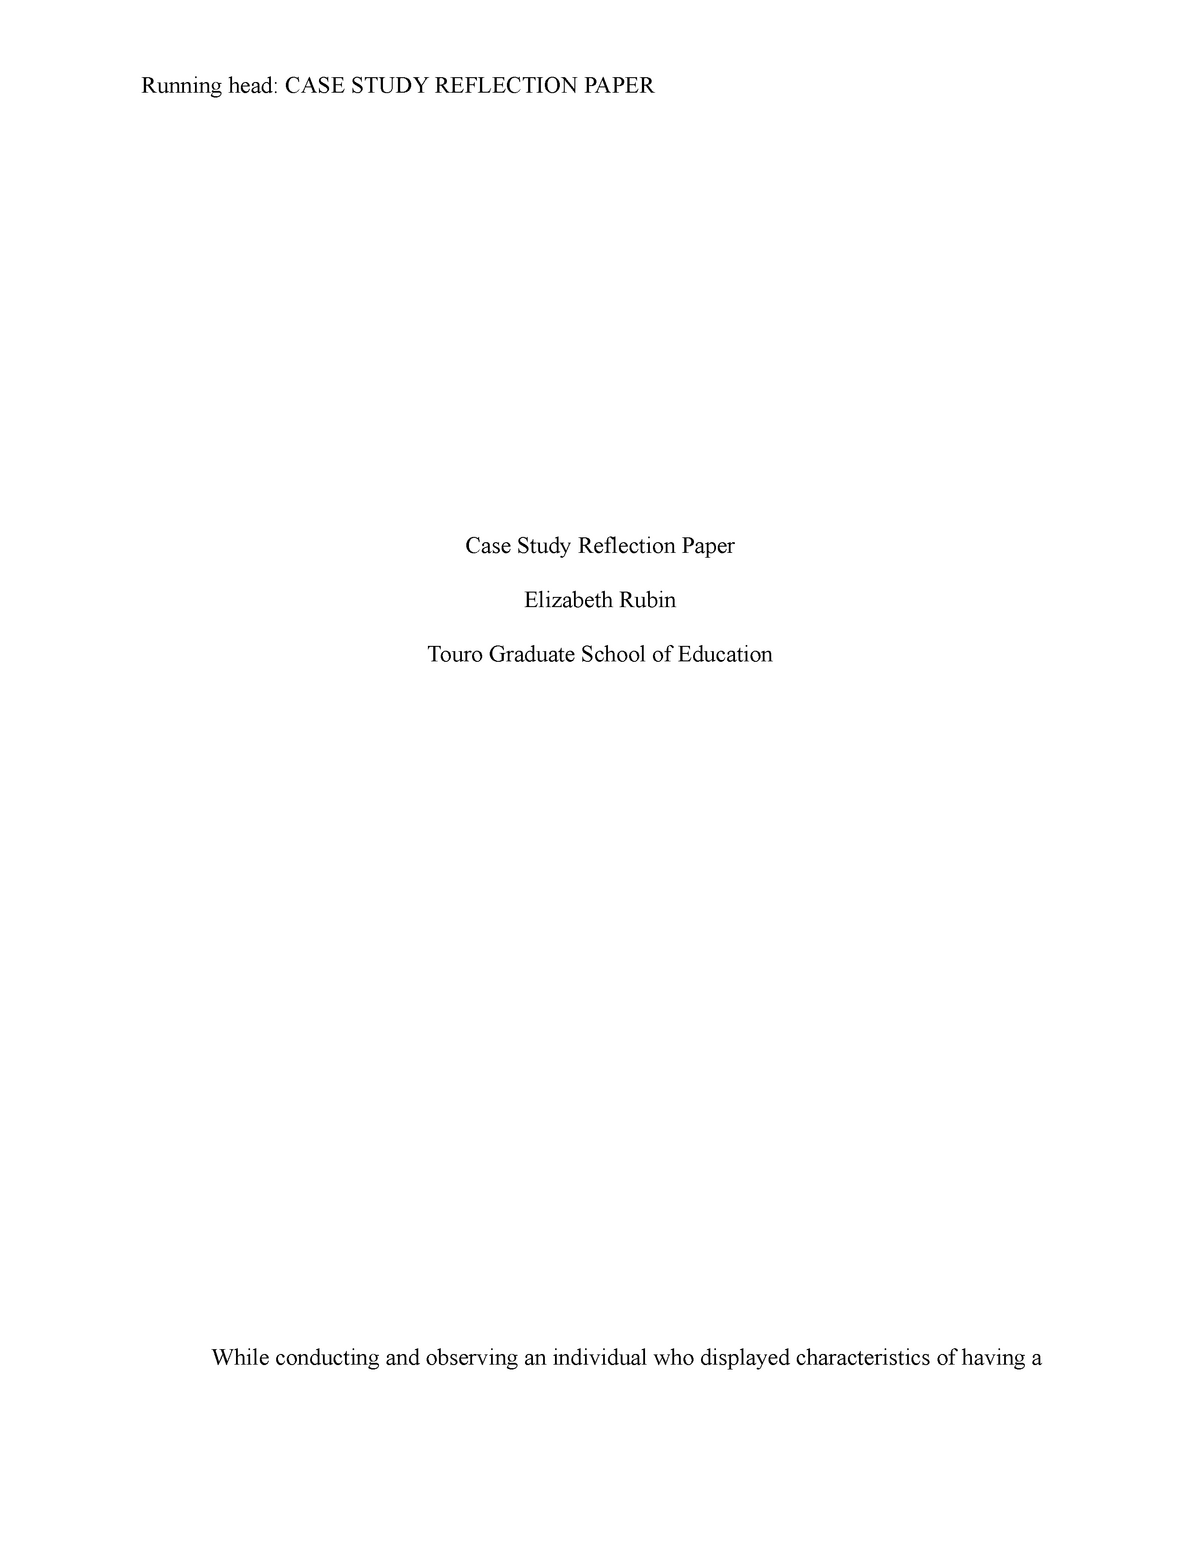 dlp case study reflection paper